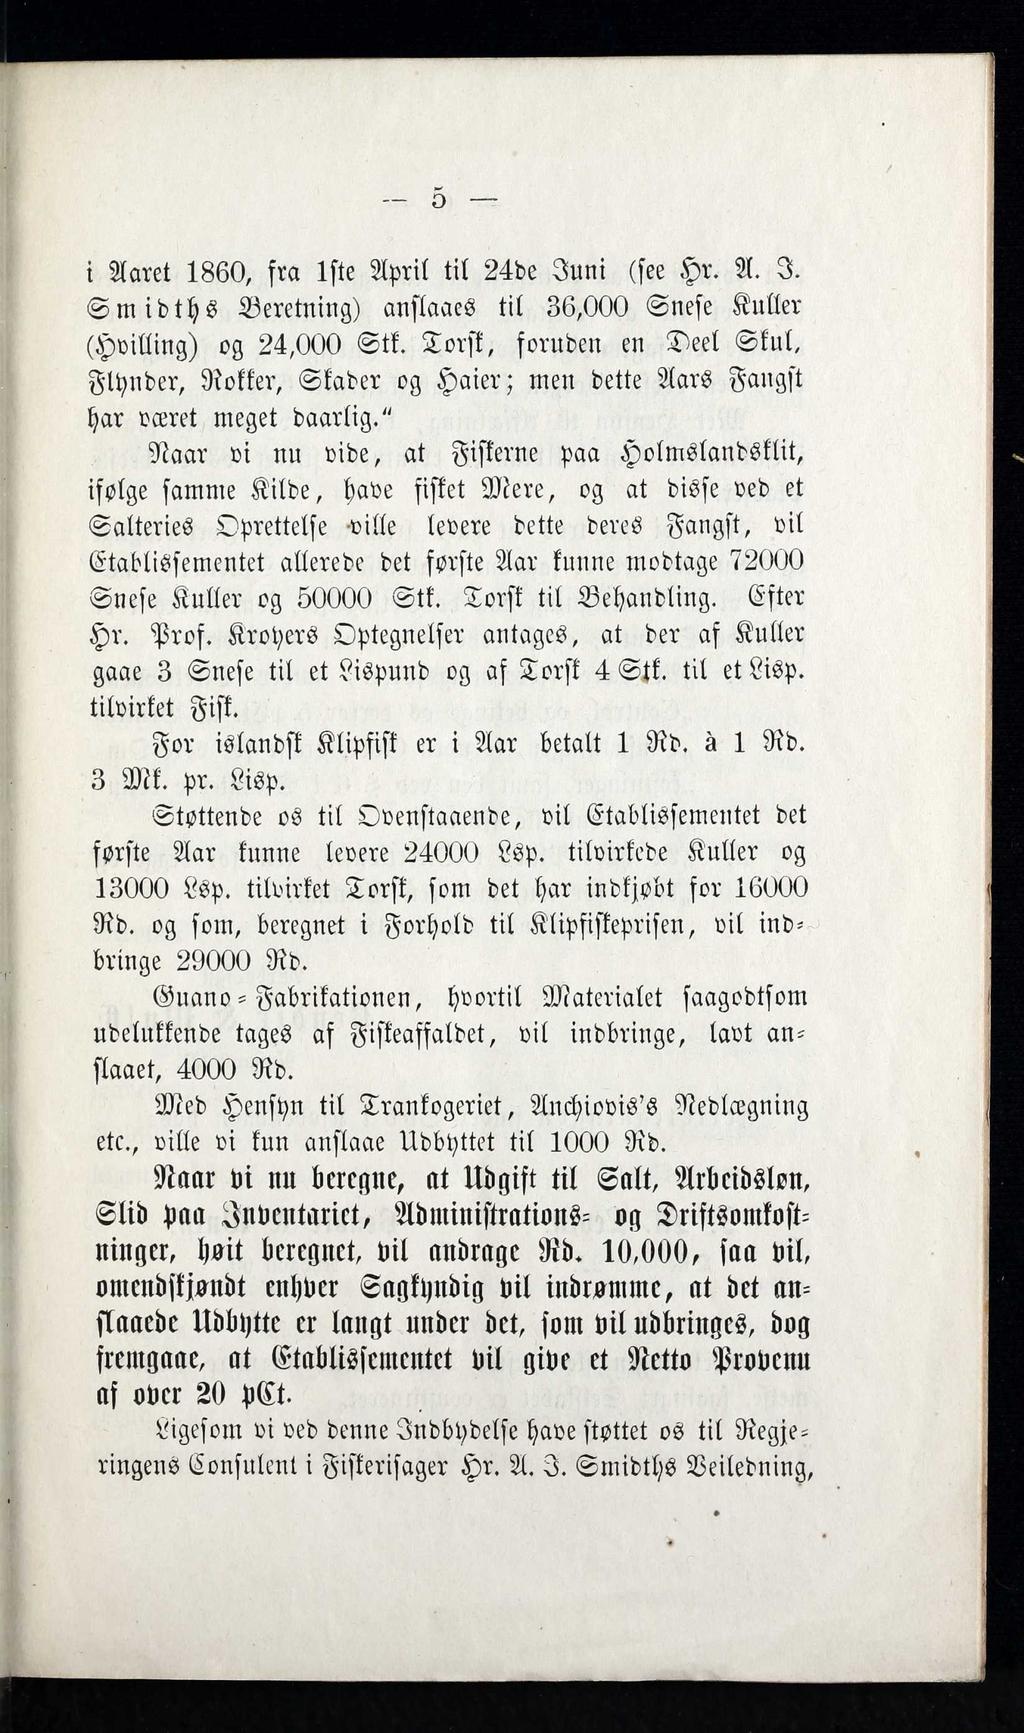 i Aaret 1860, fra 1ste A p ril t il 24de J u n i (see H r. A. I. S m idths Beretning) anstaaes t il 36,000 Snese Kuller (H villin g ) og 24,000 S tk.